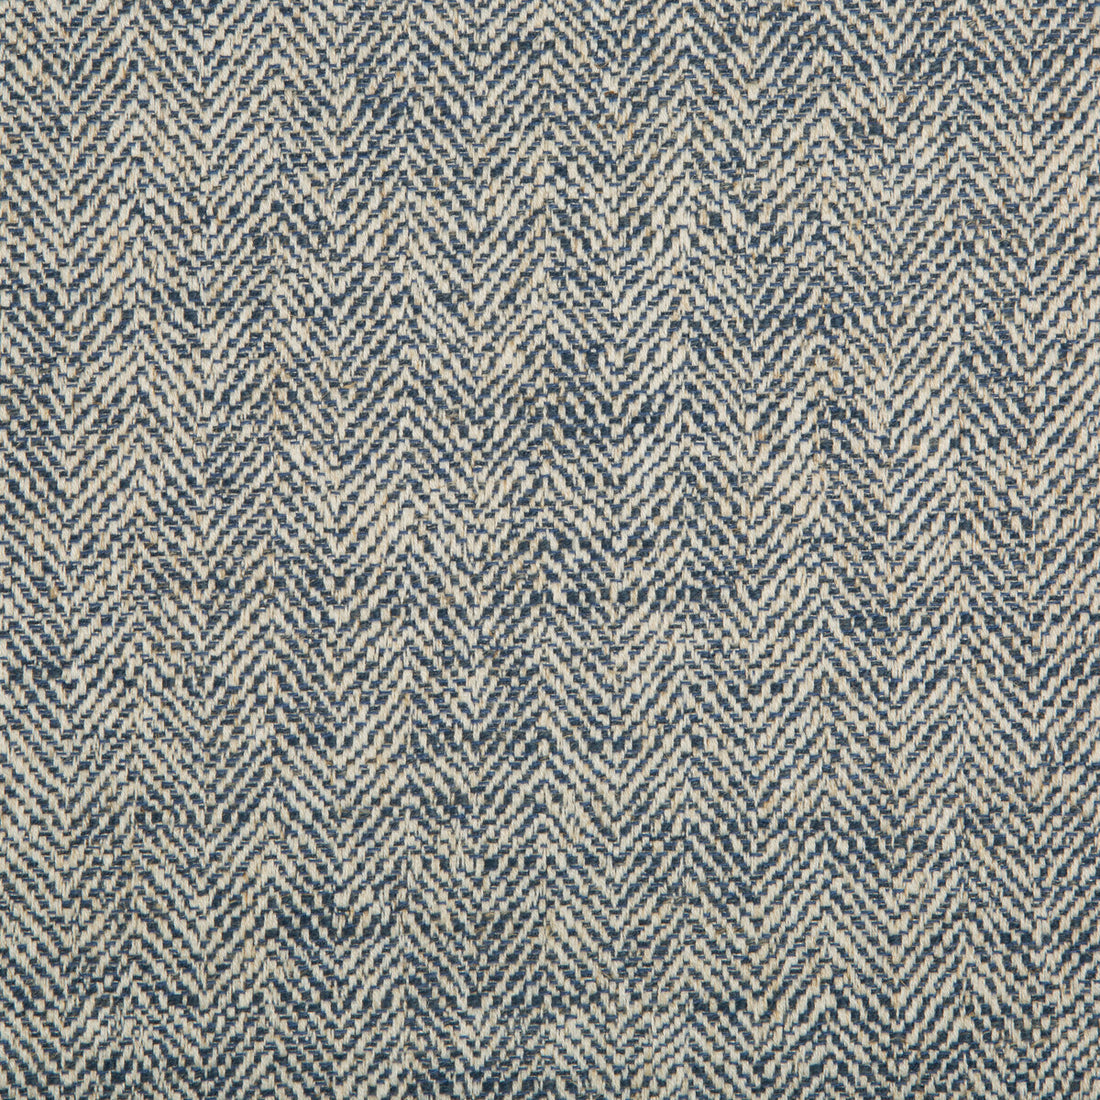 Kravet Smart fabric in 35228-51 color - pattern 35228.51.0 - by Kravet Smart in the Performance Kravetarmor collection